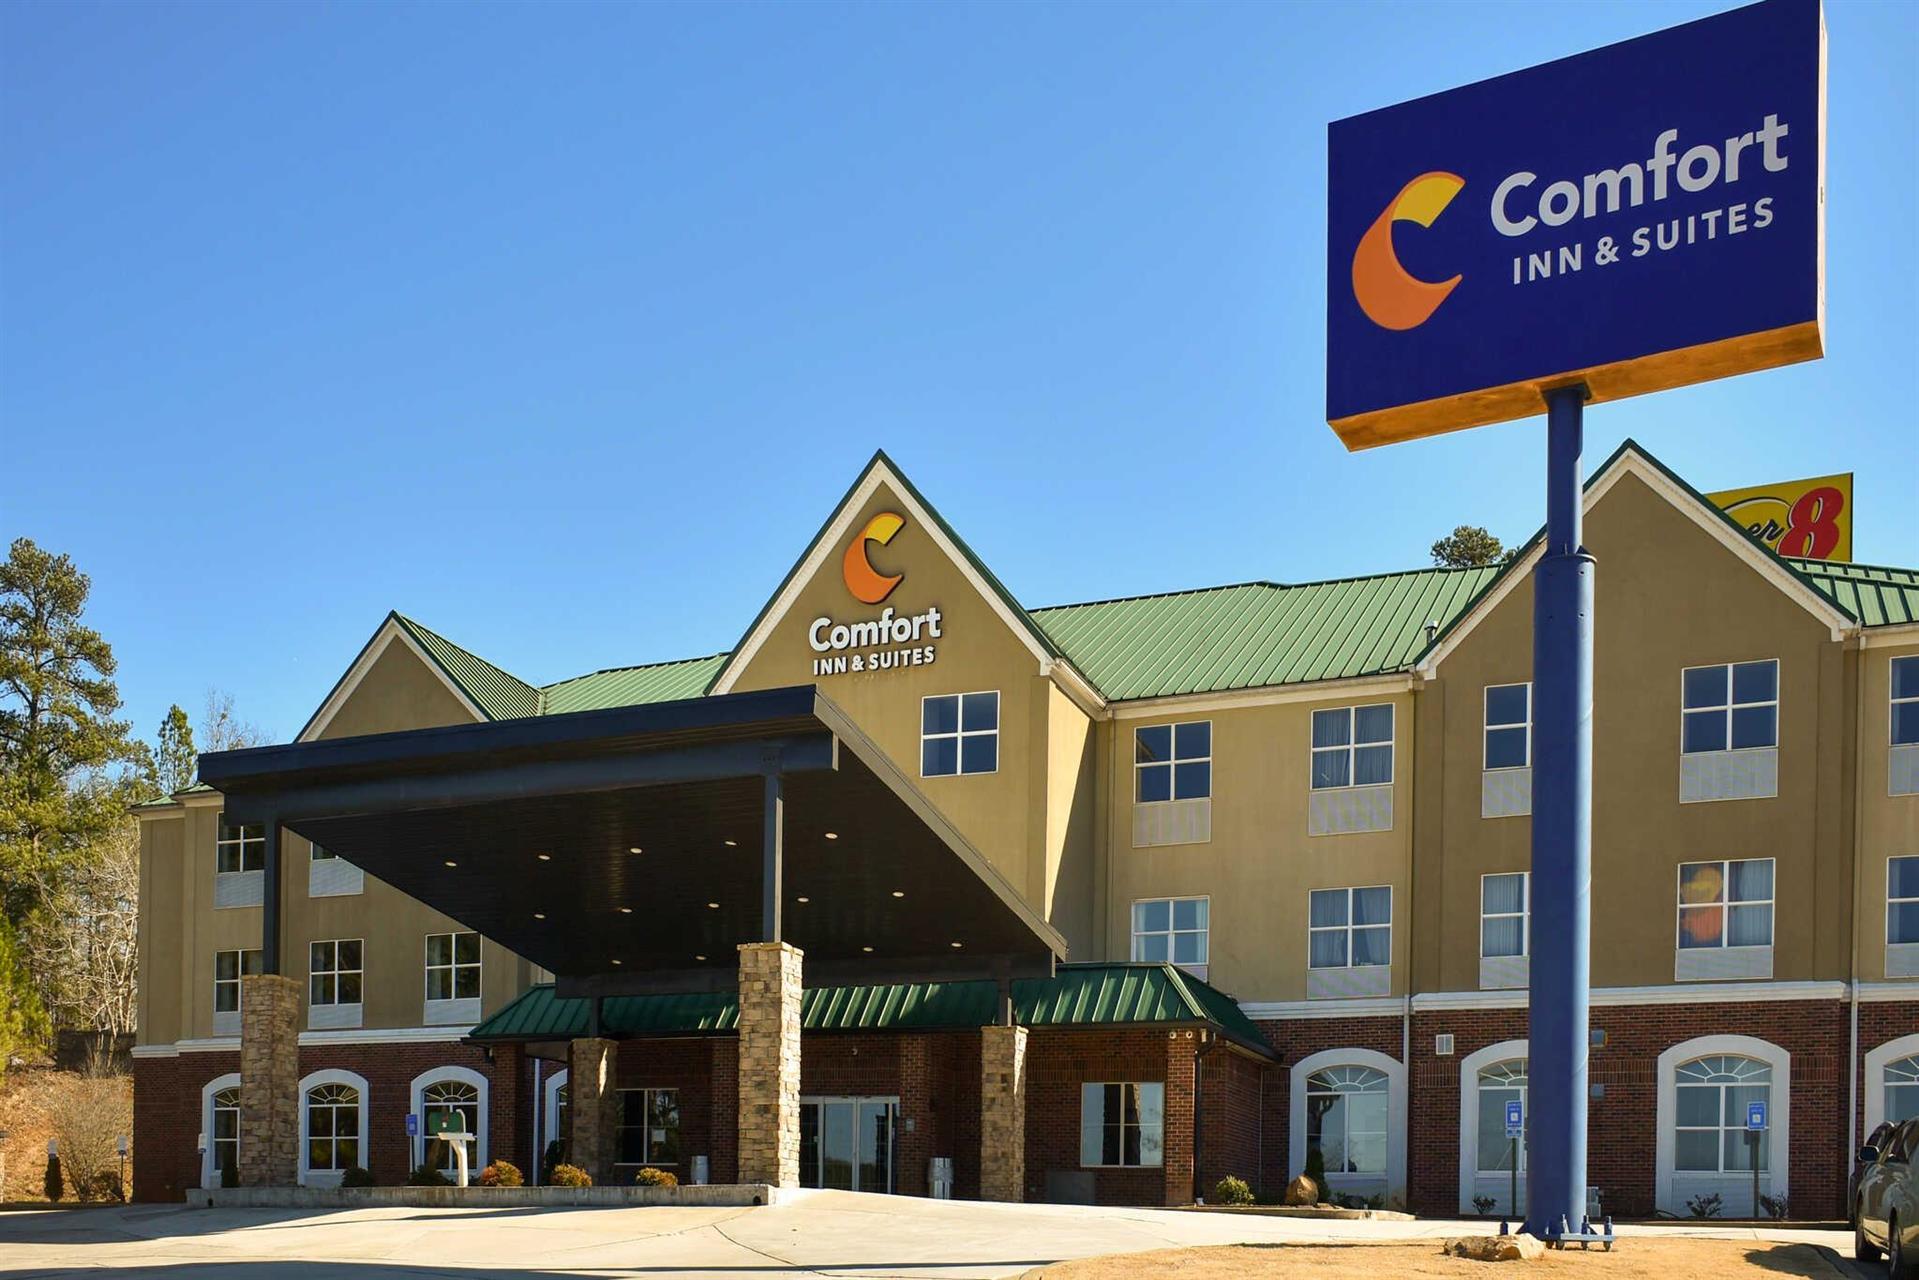 Comfort Inn & Suites - Cartersville in Cartersville, GA